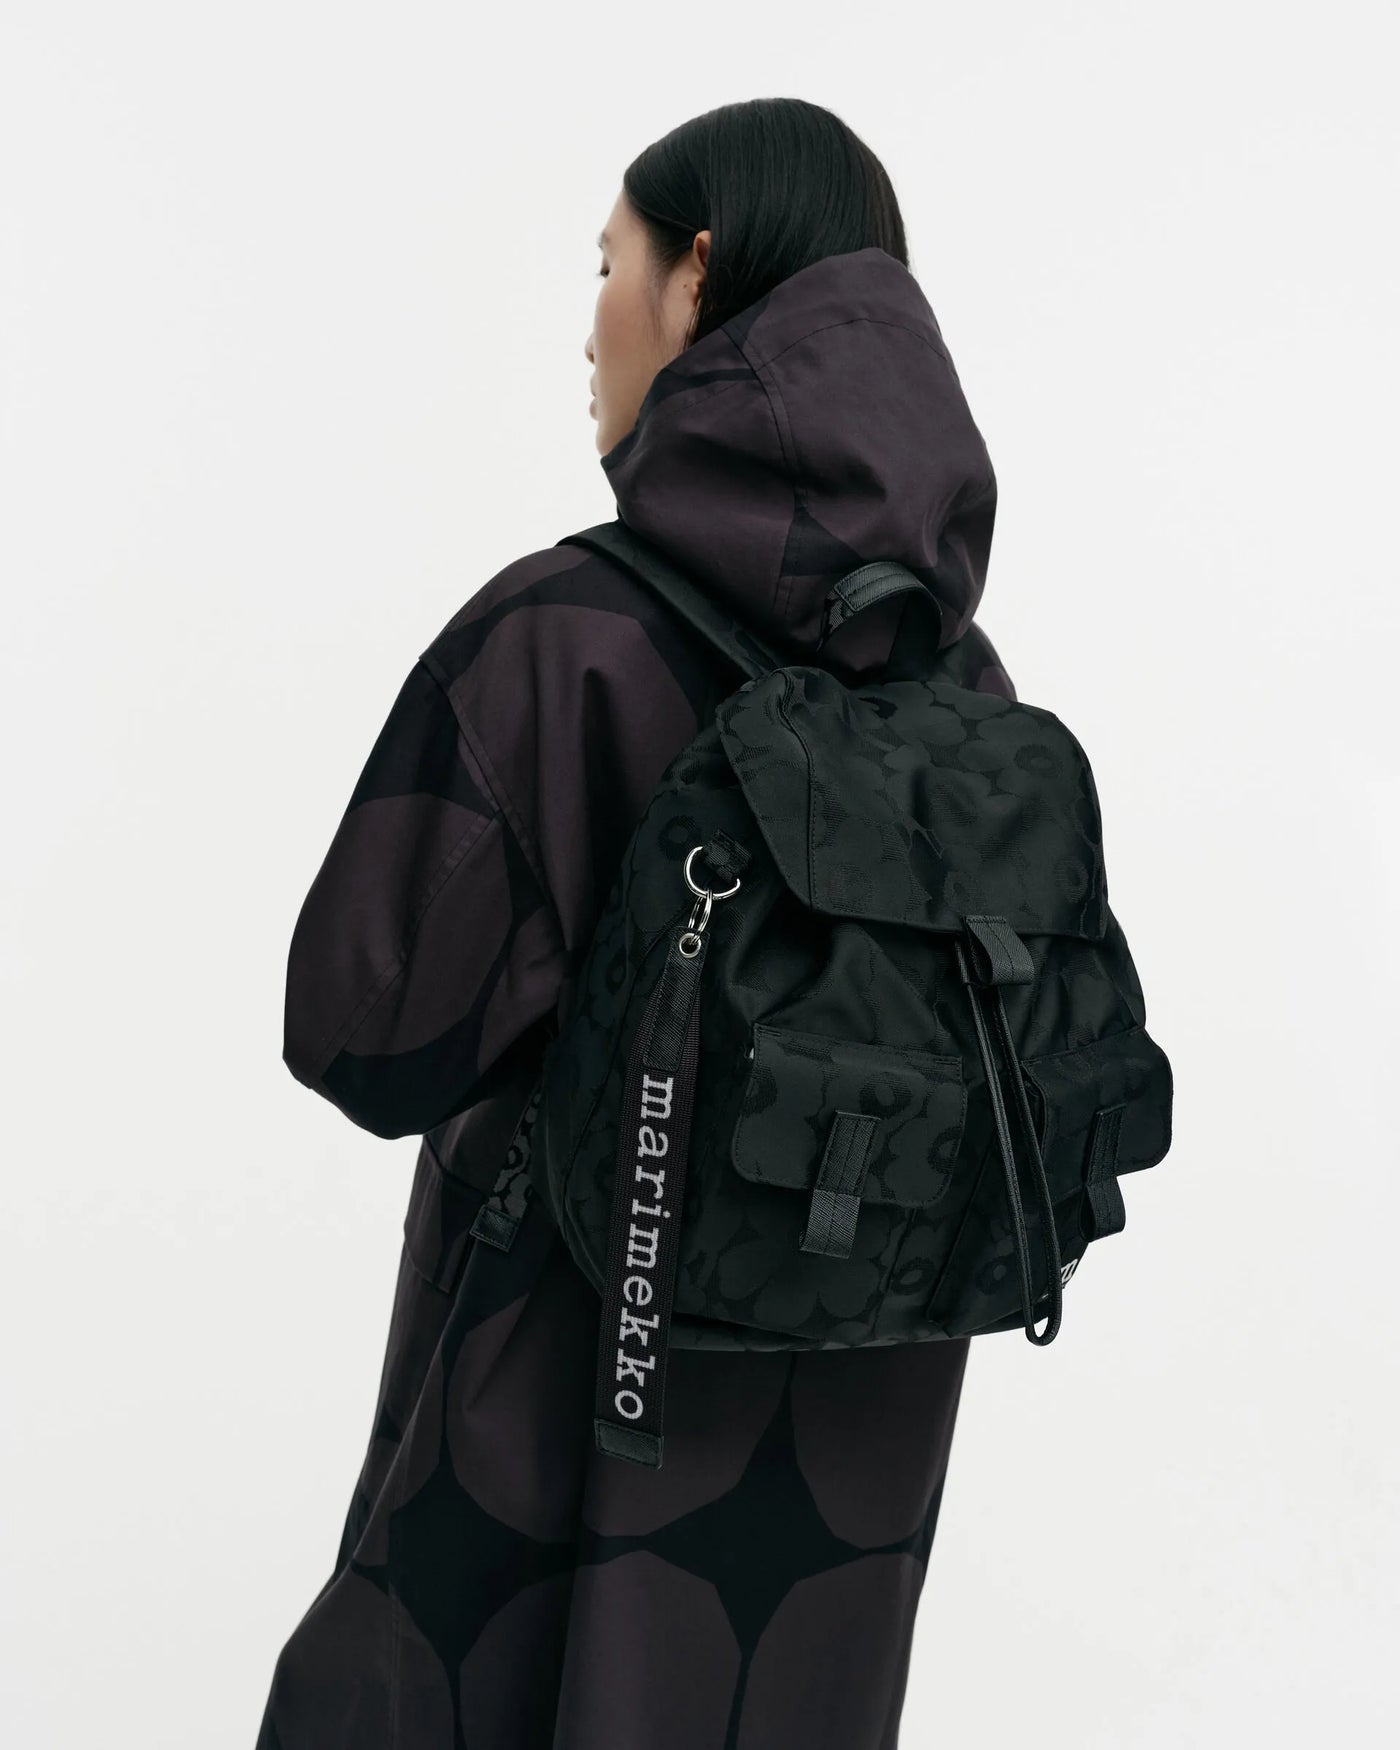 Everything Backpack L Unikko - Black